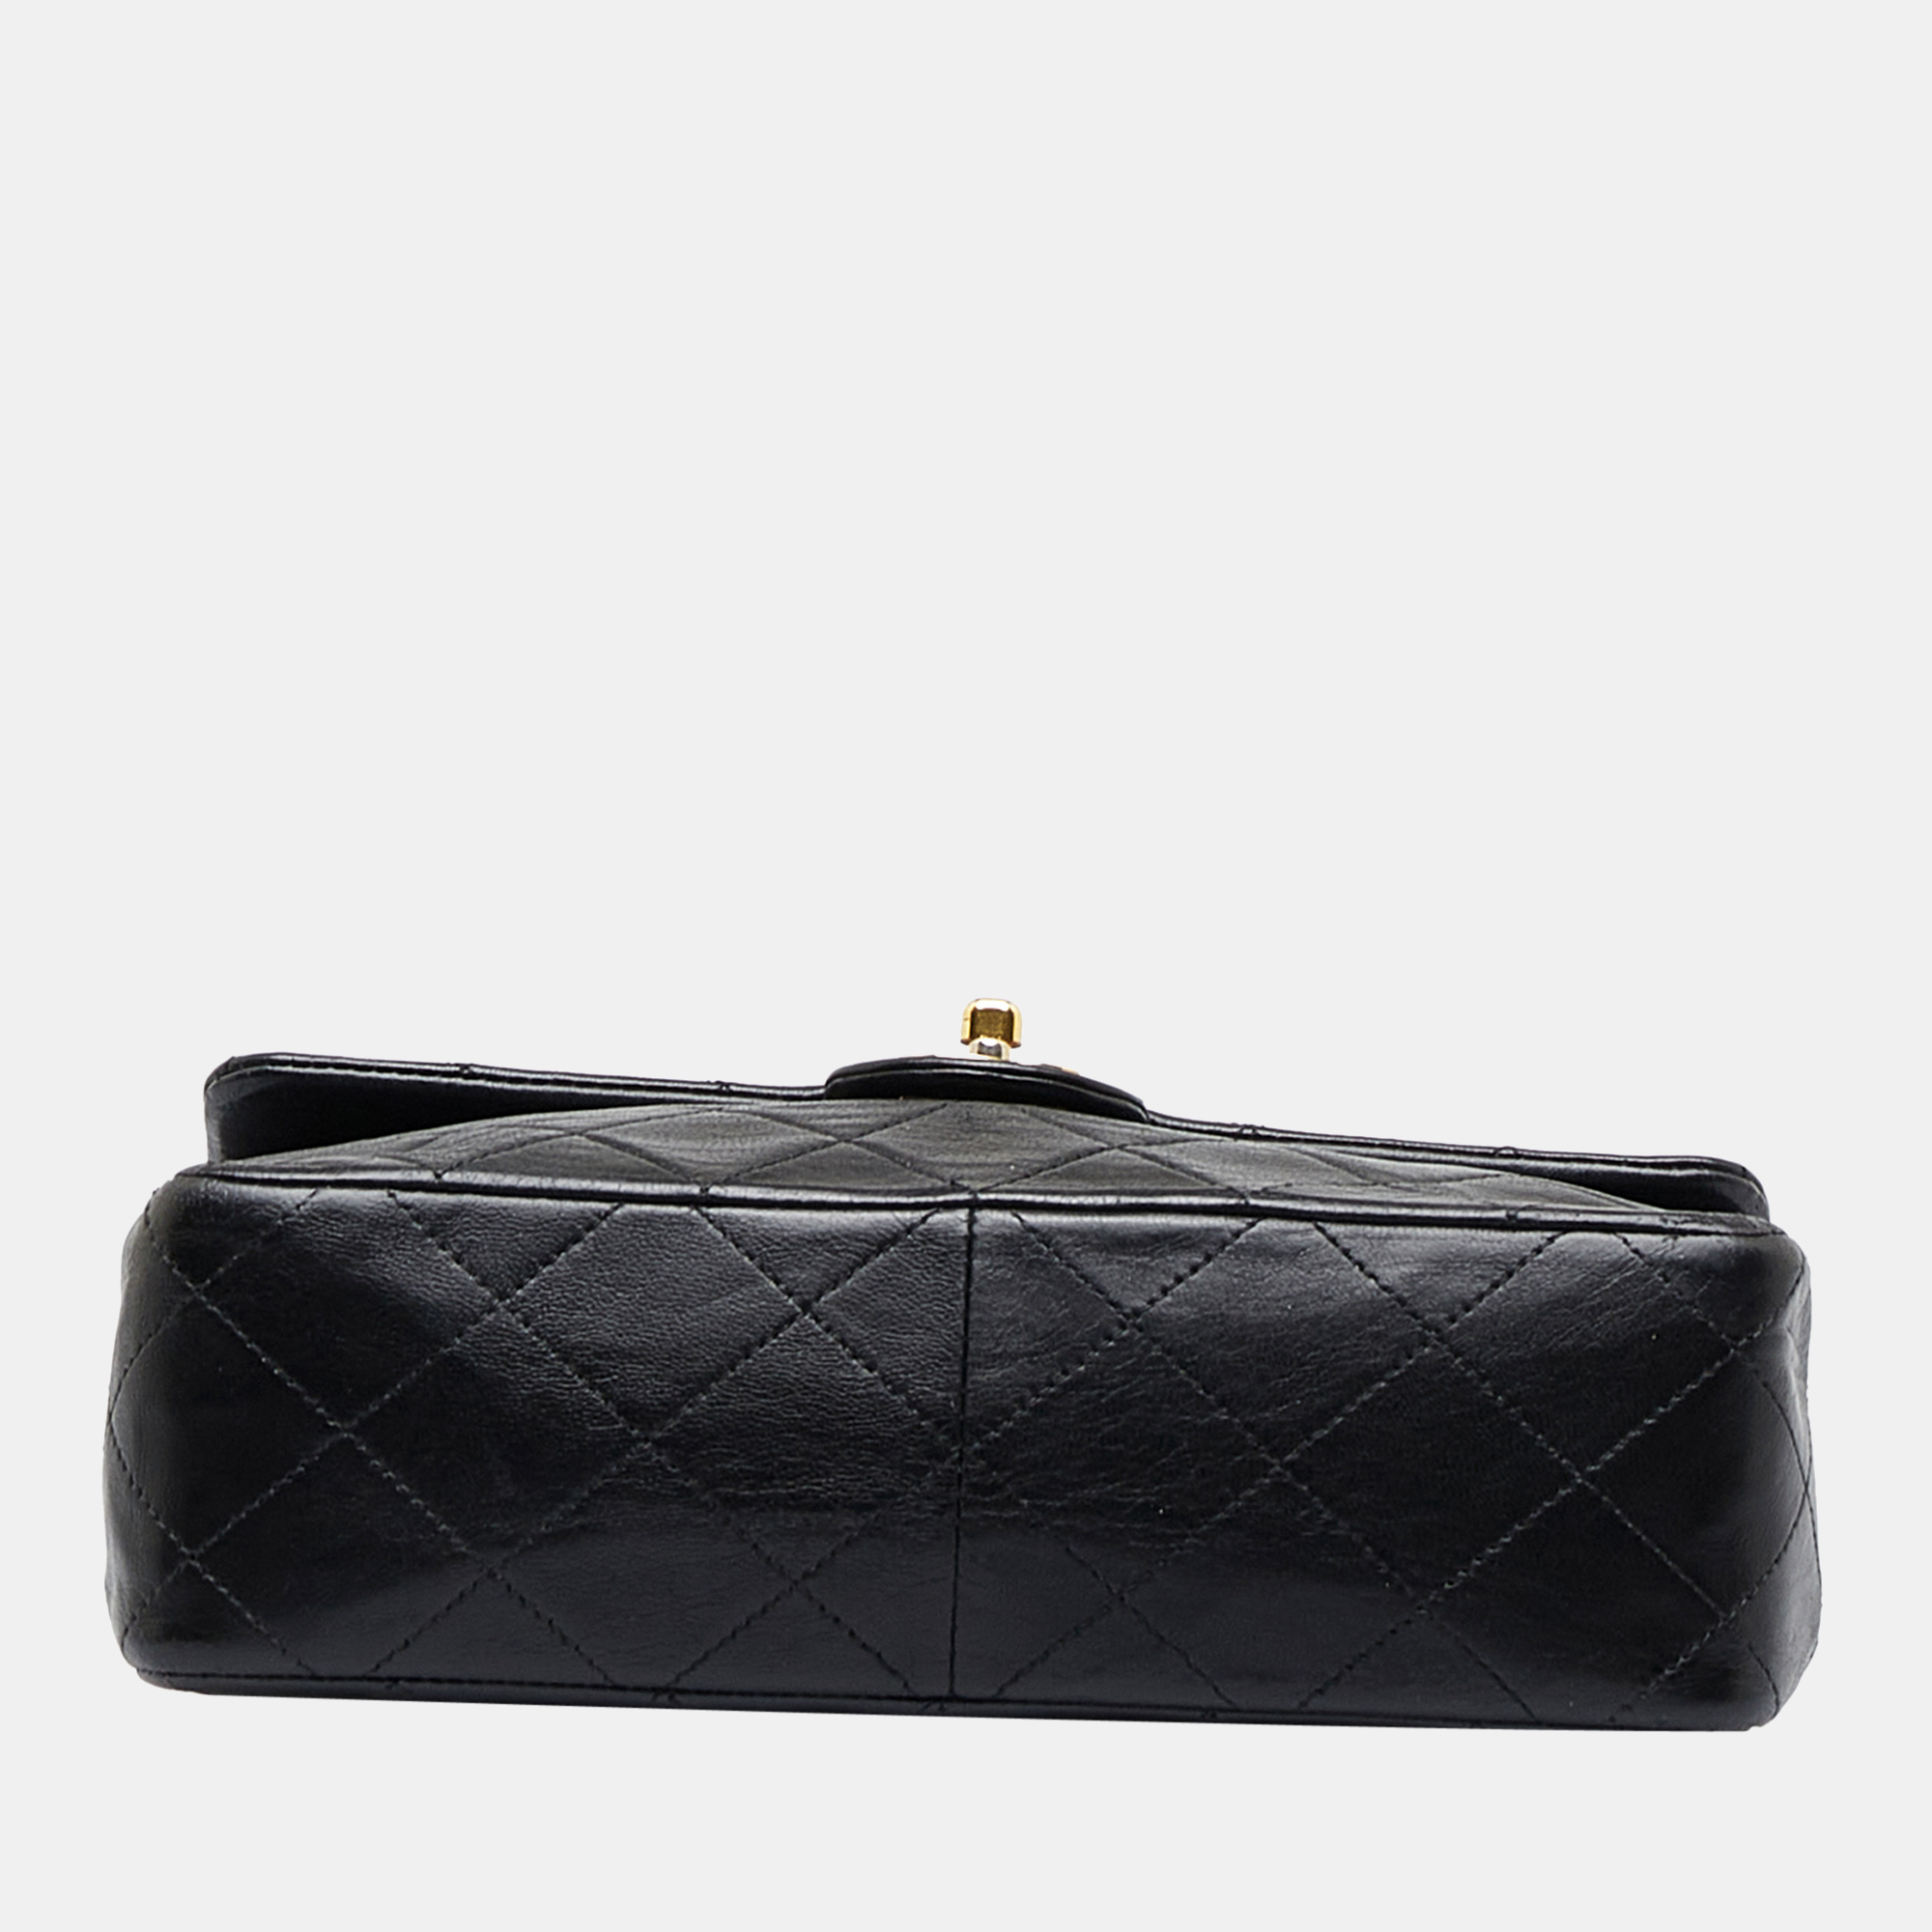 Chanel Black Medium Classic Lambskin Single Flap Bag